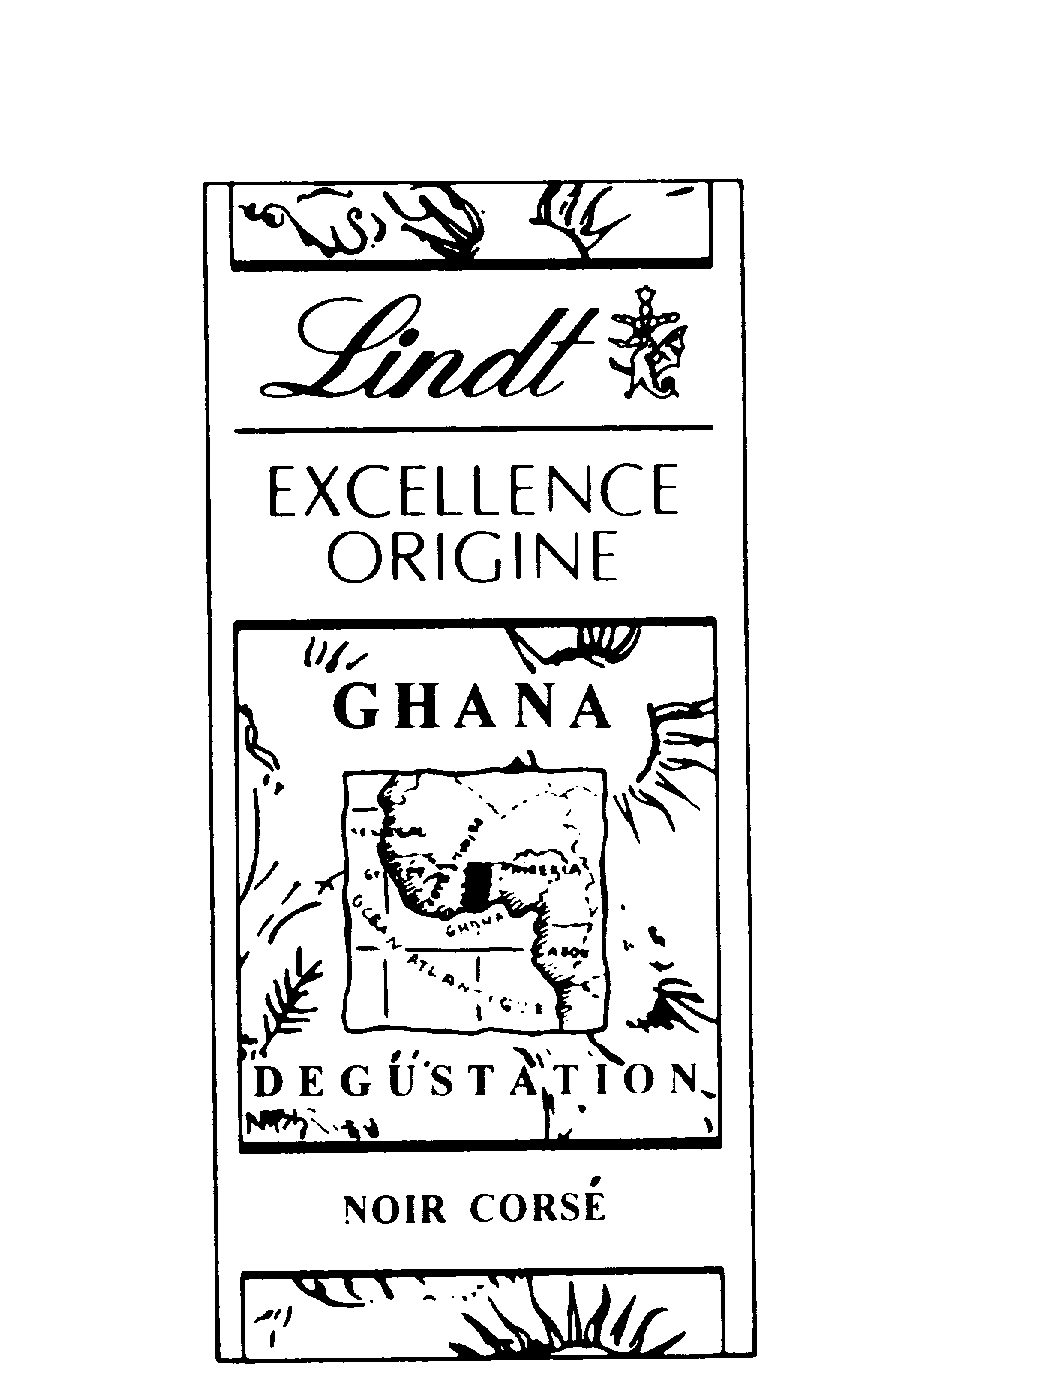  LINDT EXCELLENCE ORIGINE GHANA DEGUSTATION NOIR CORSE